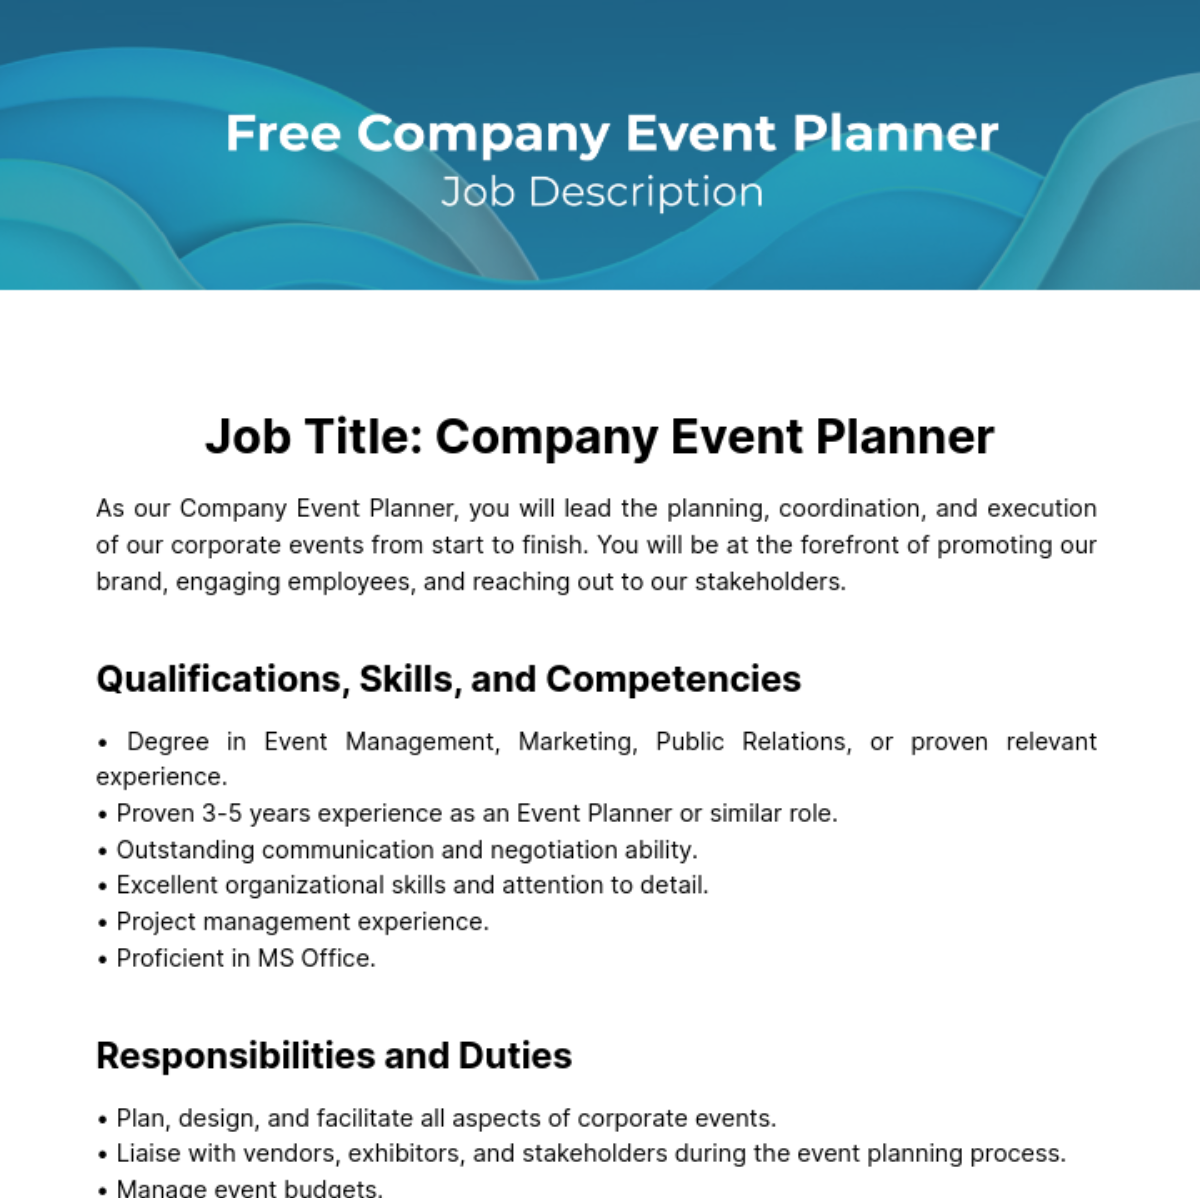 Company Event Planner Job Description Template